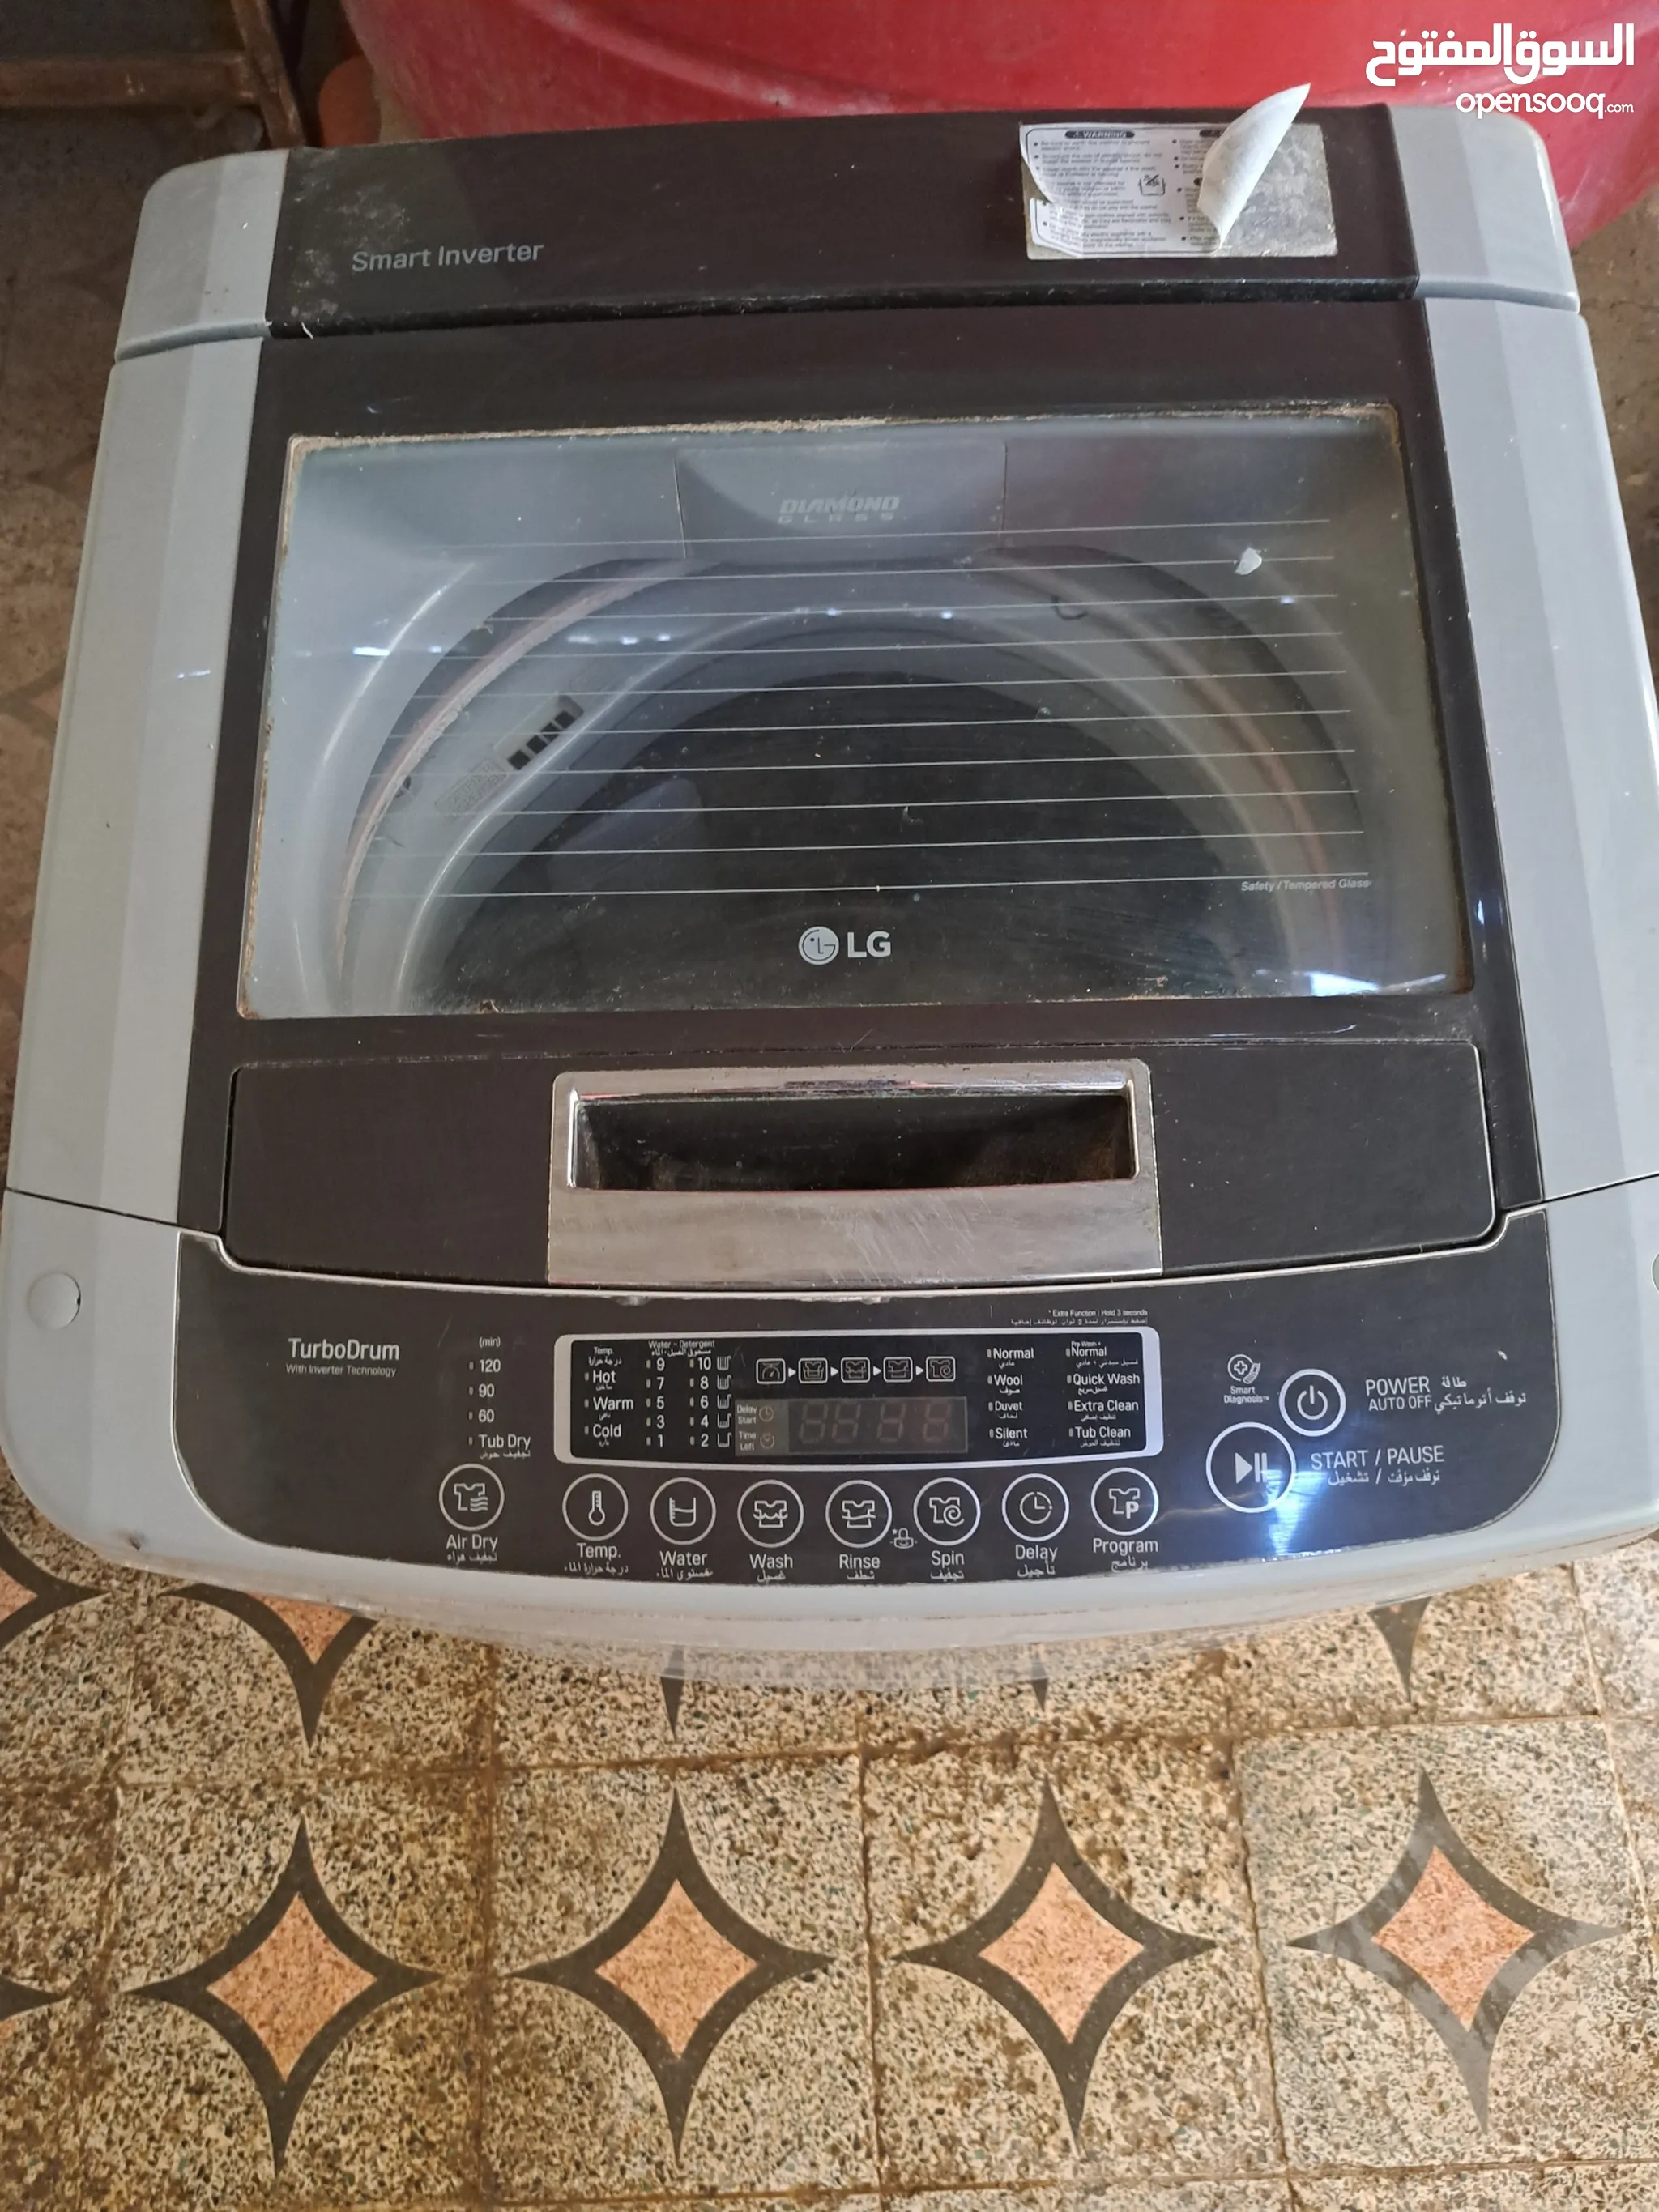 LG Machines for in Basra - Automatic Washing Machine : Portable | OpenSooq